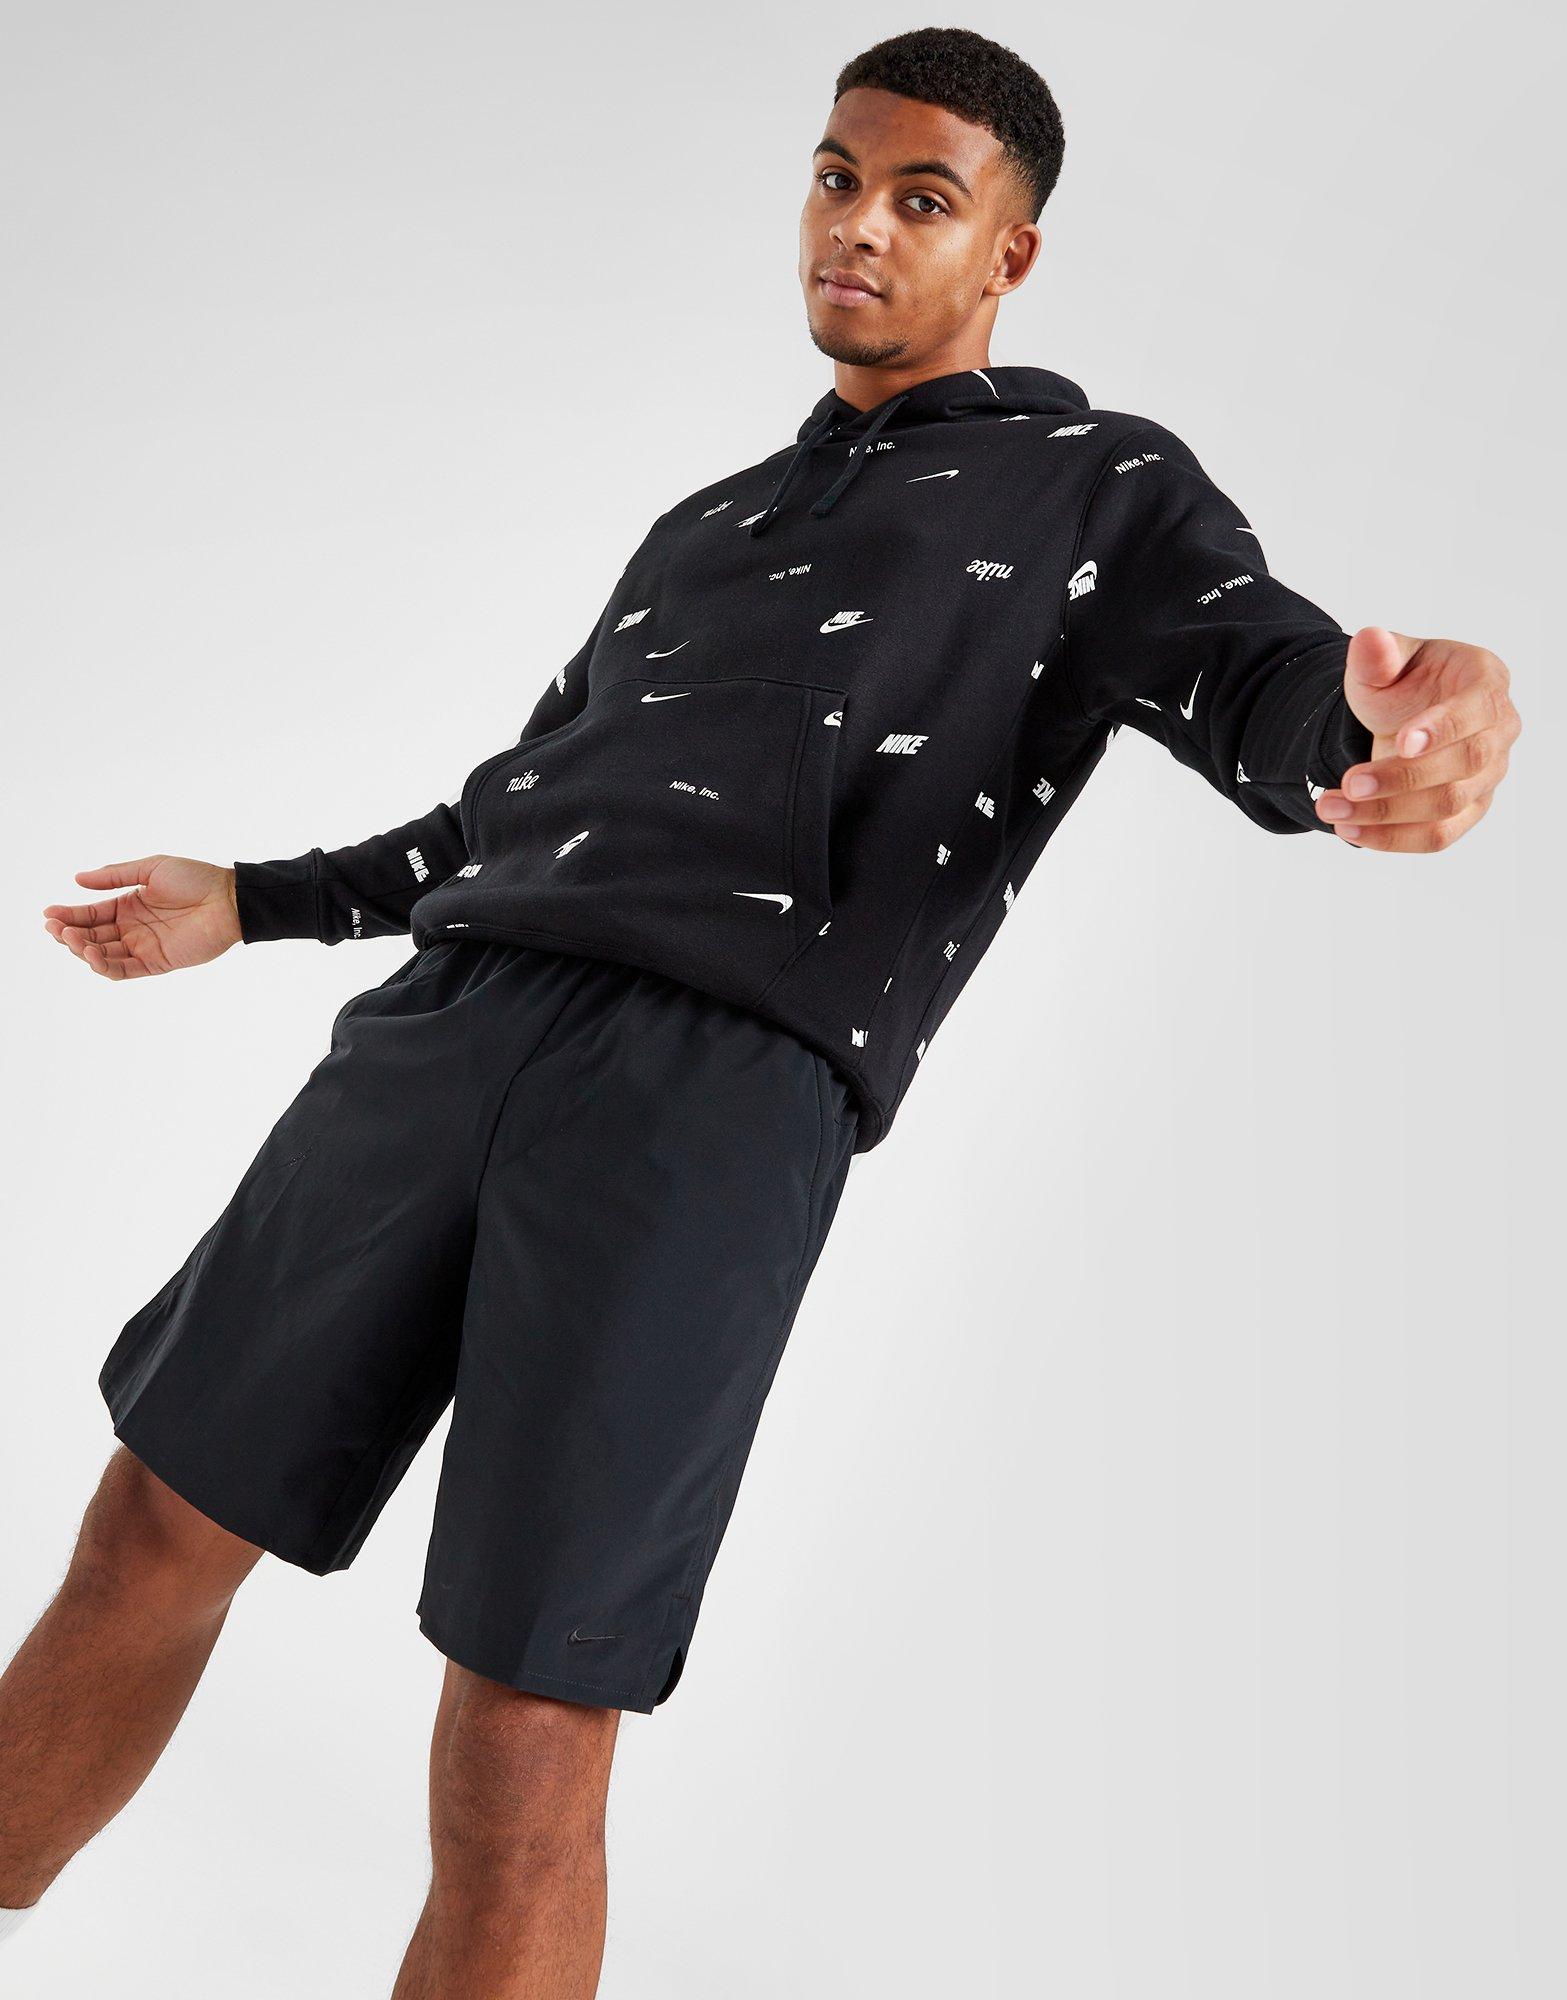 Men's Dri-FIT® Flex 9 Woven Short, Nike